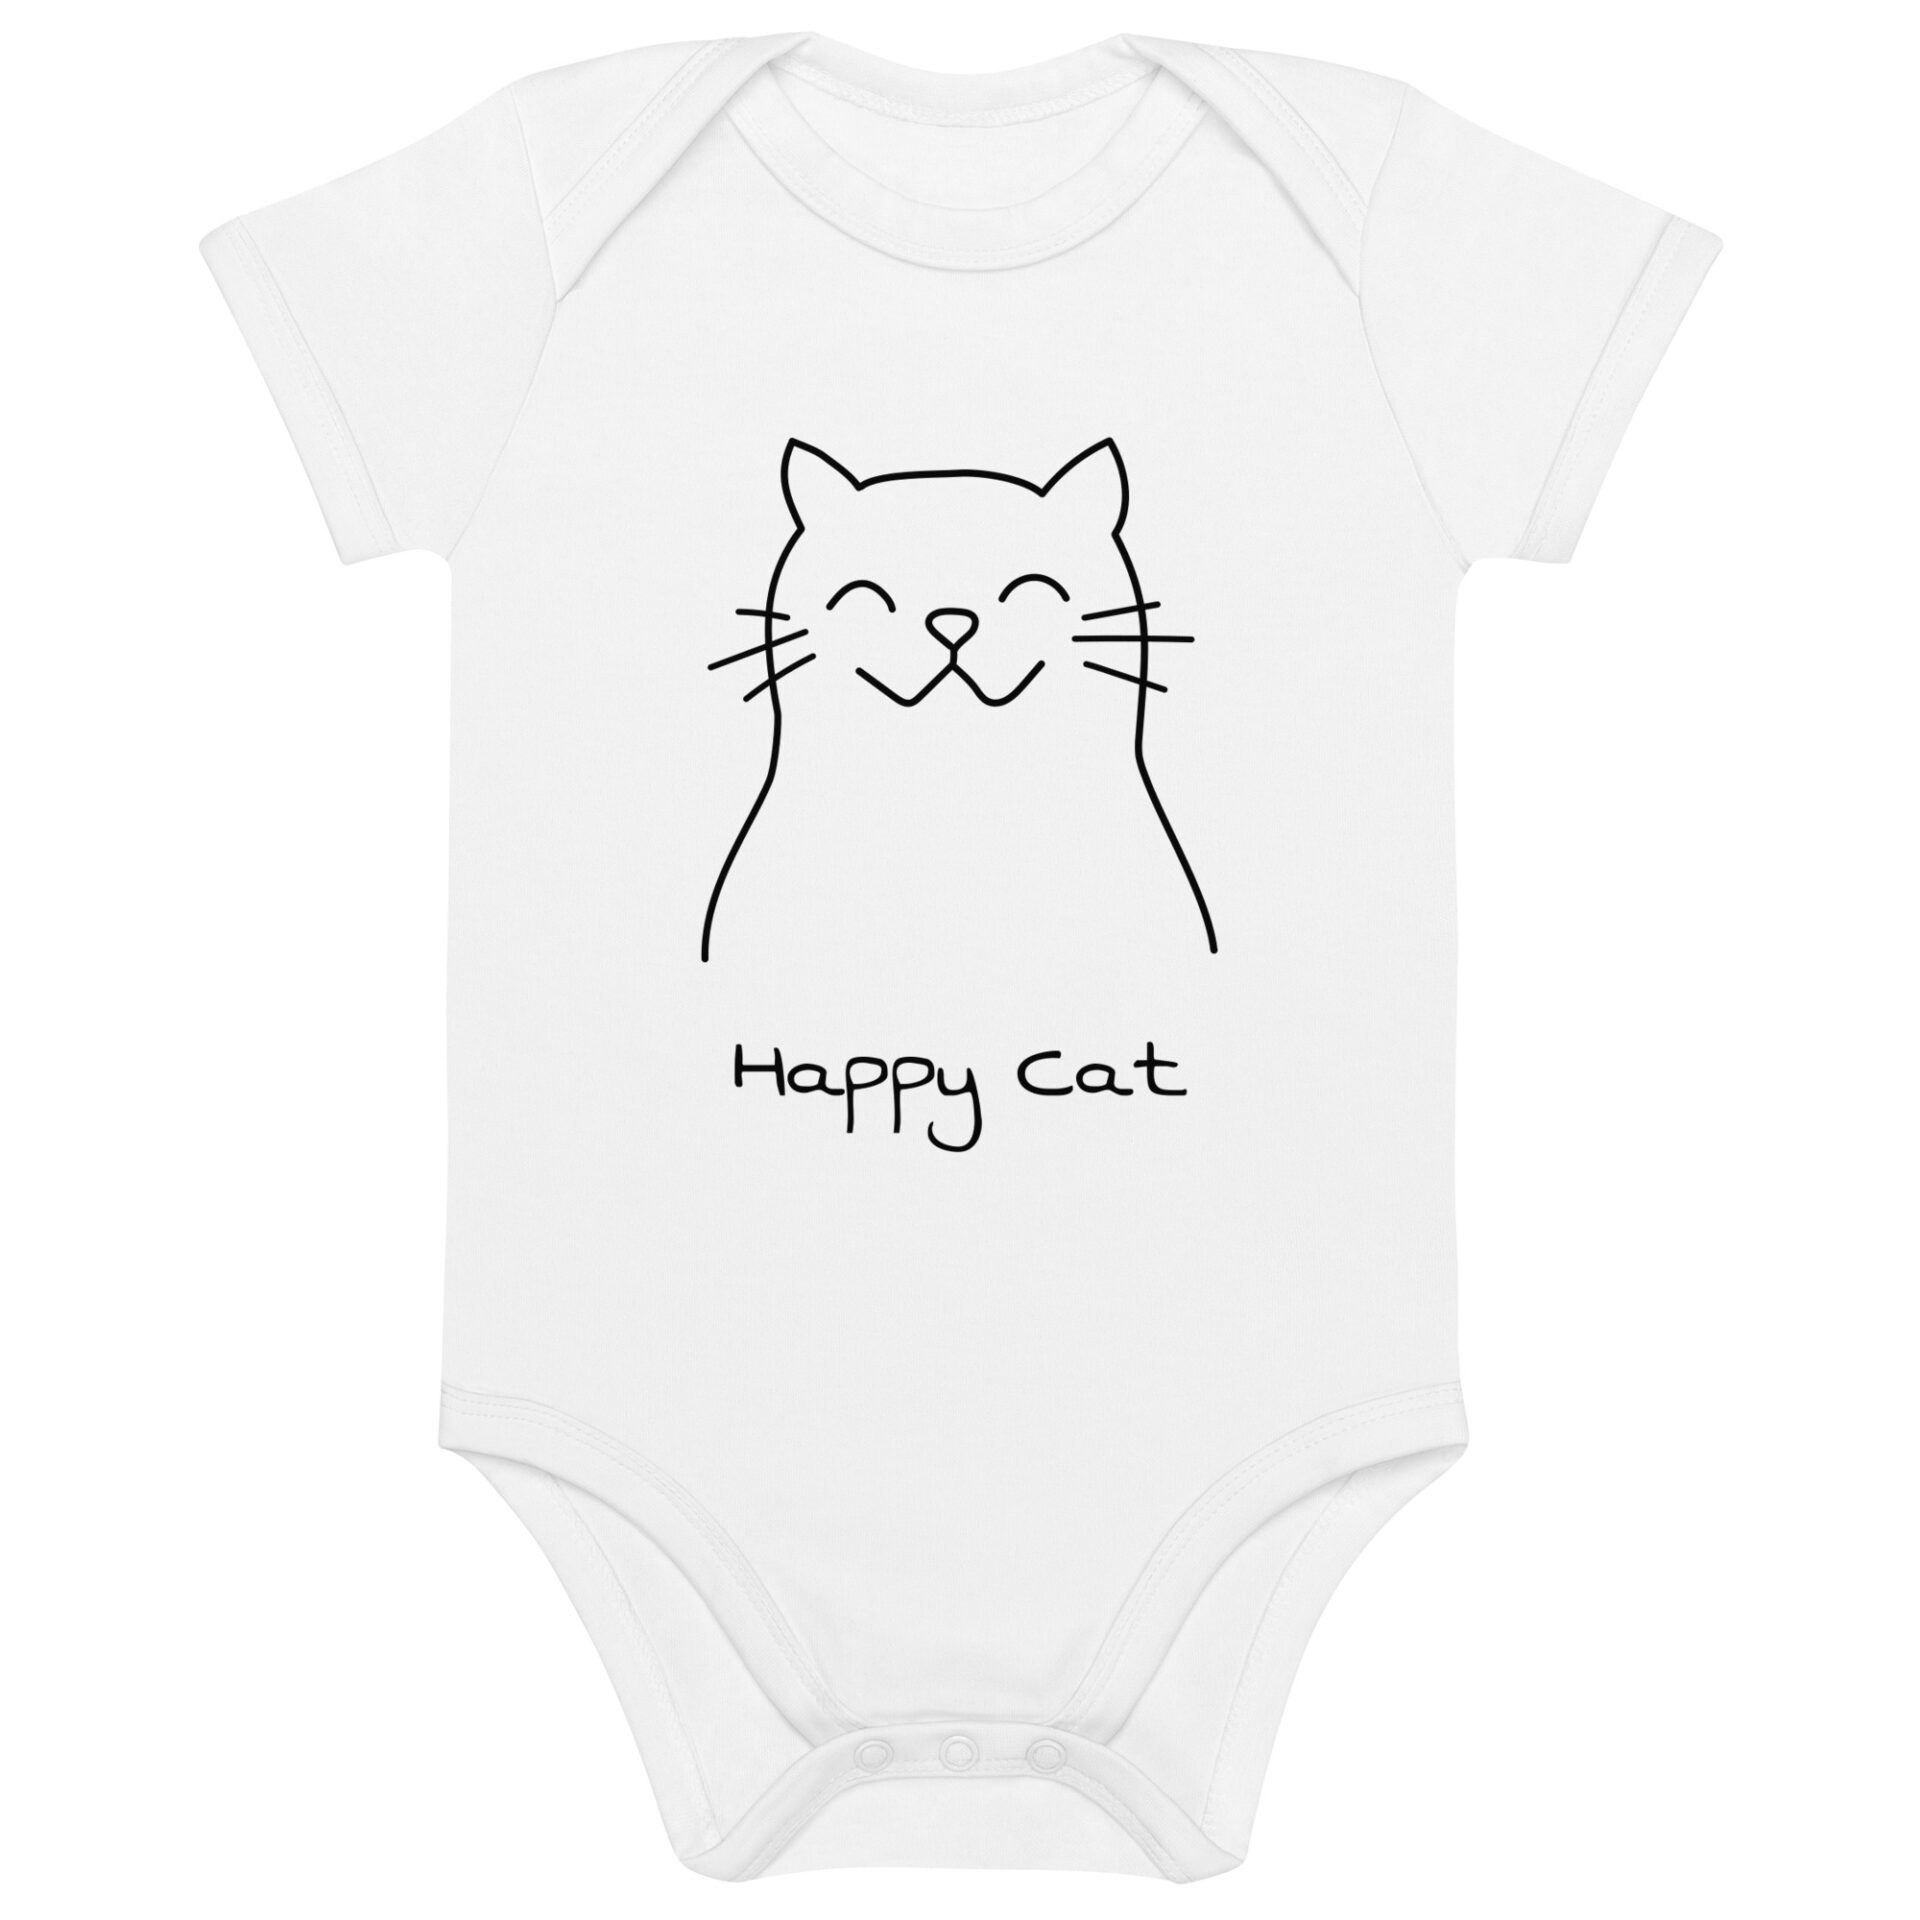 Organic cotton baby bodysuit, “Happy Cat”